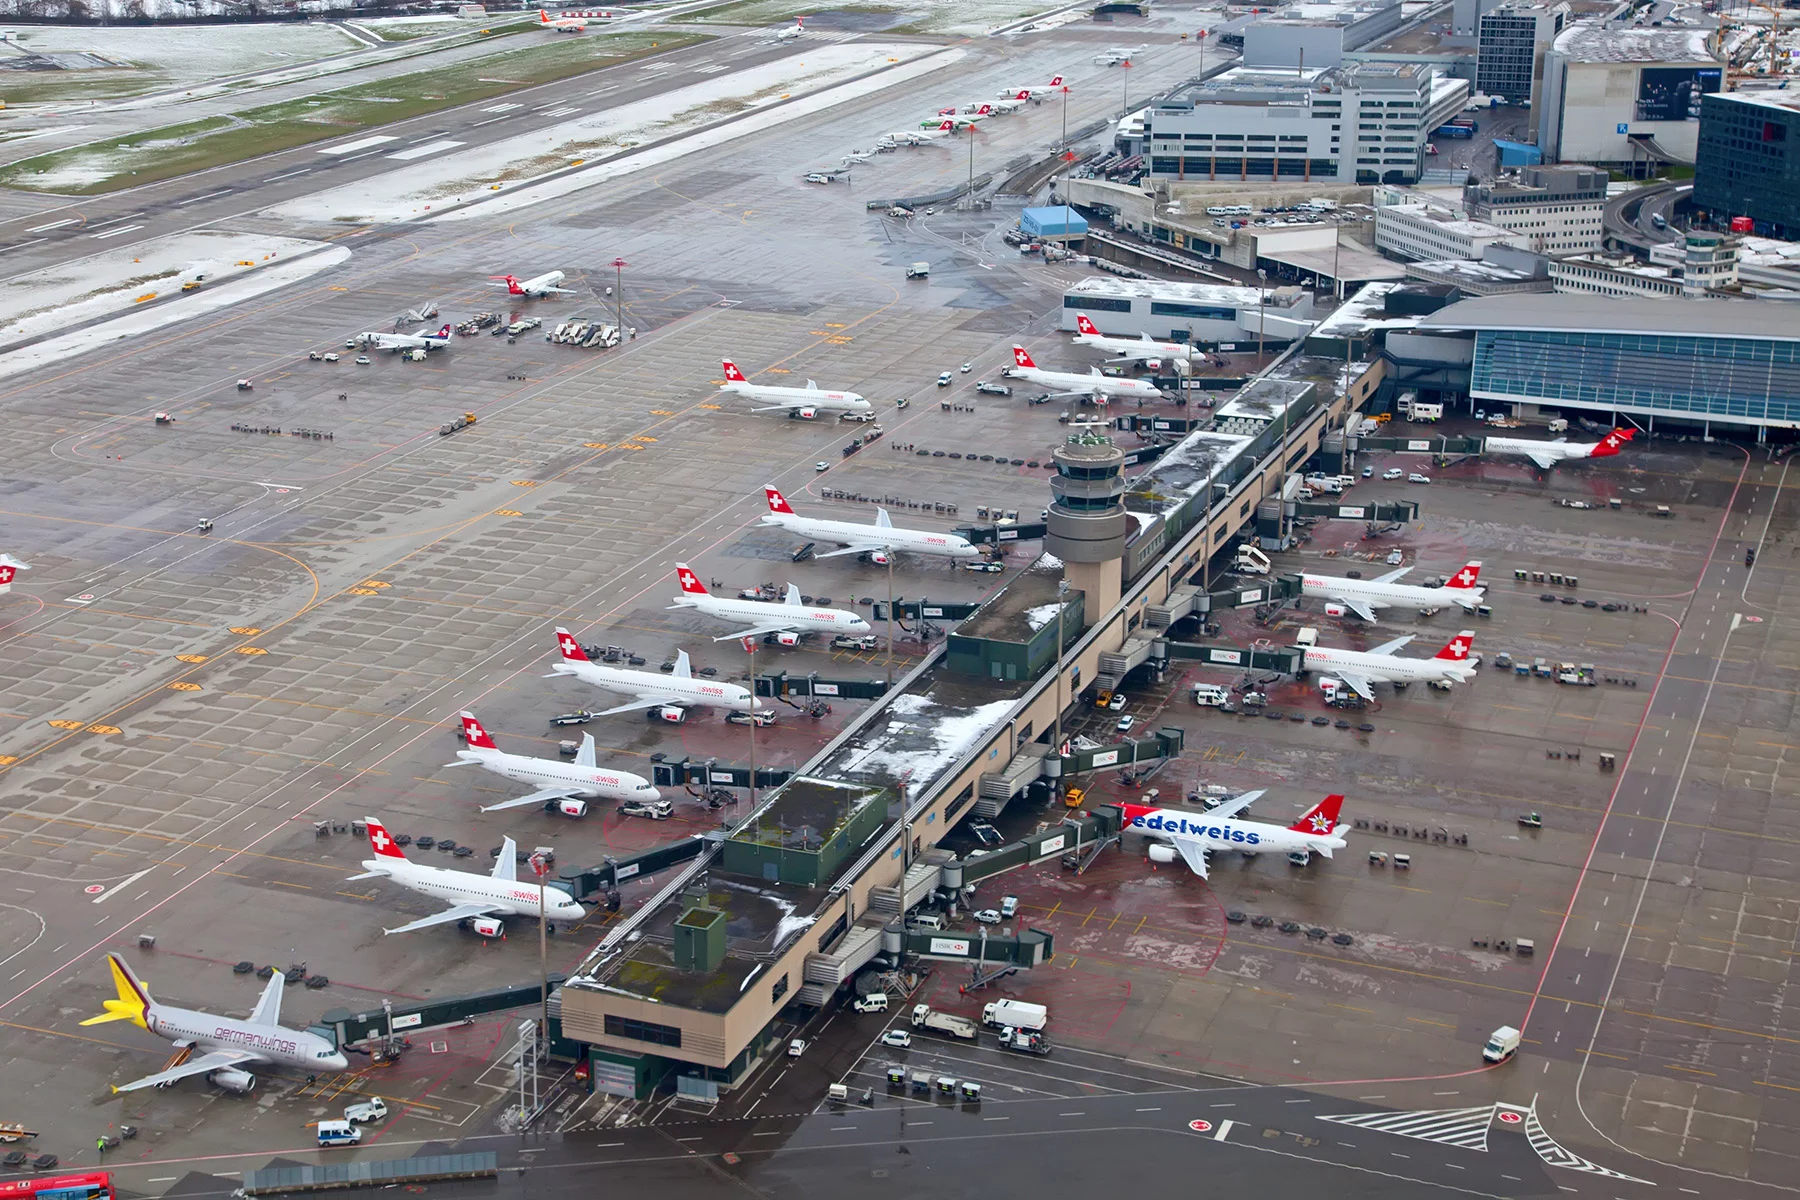 Zurich Airport from overhead